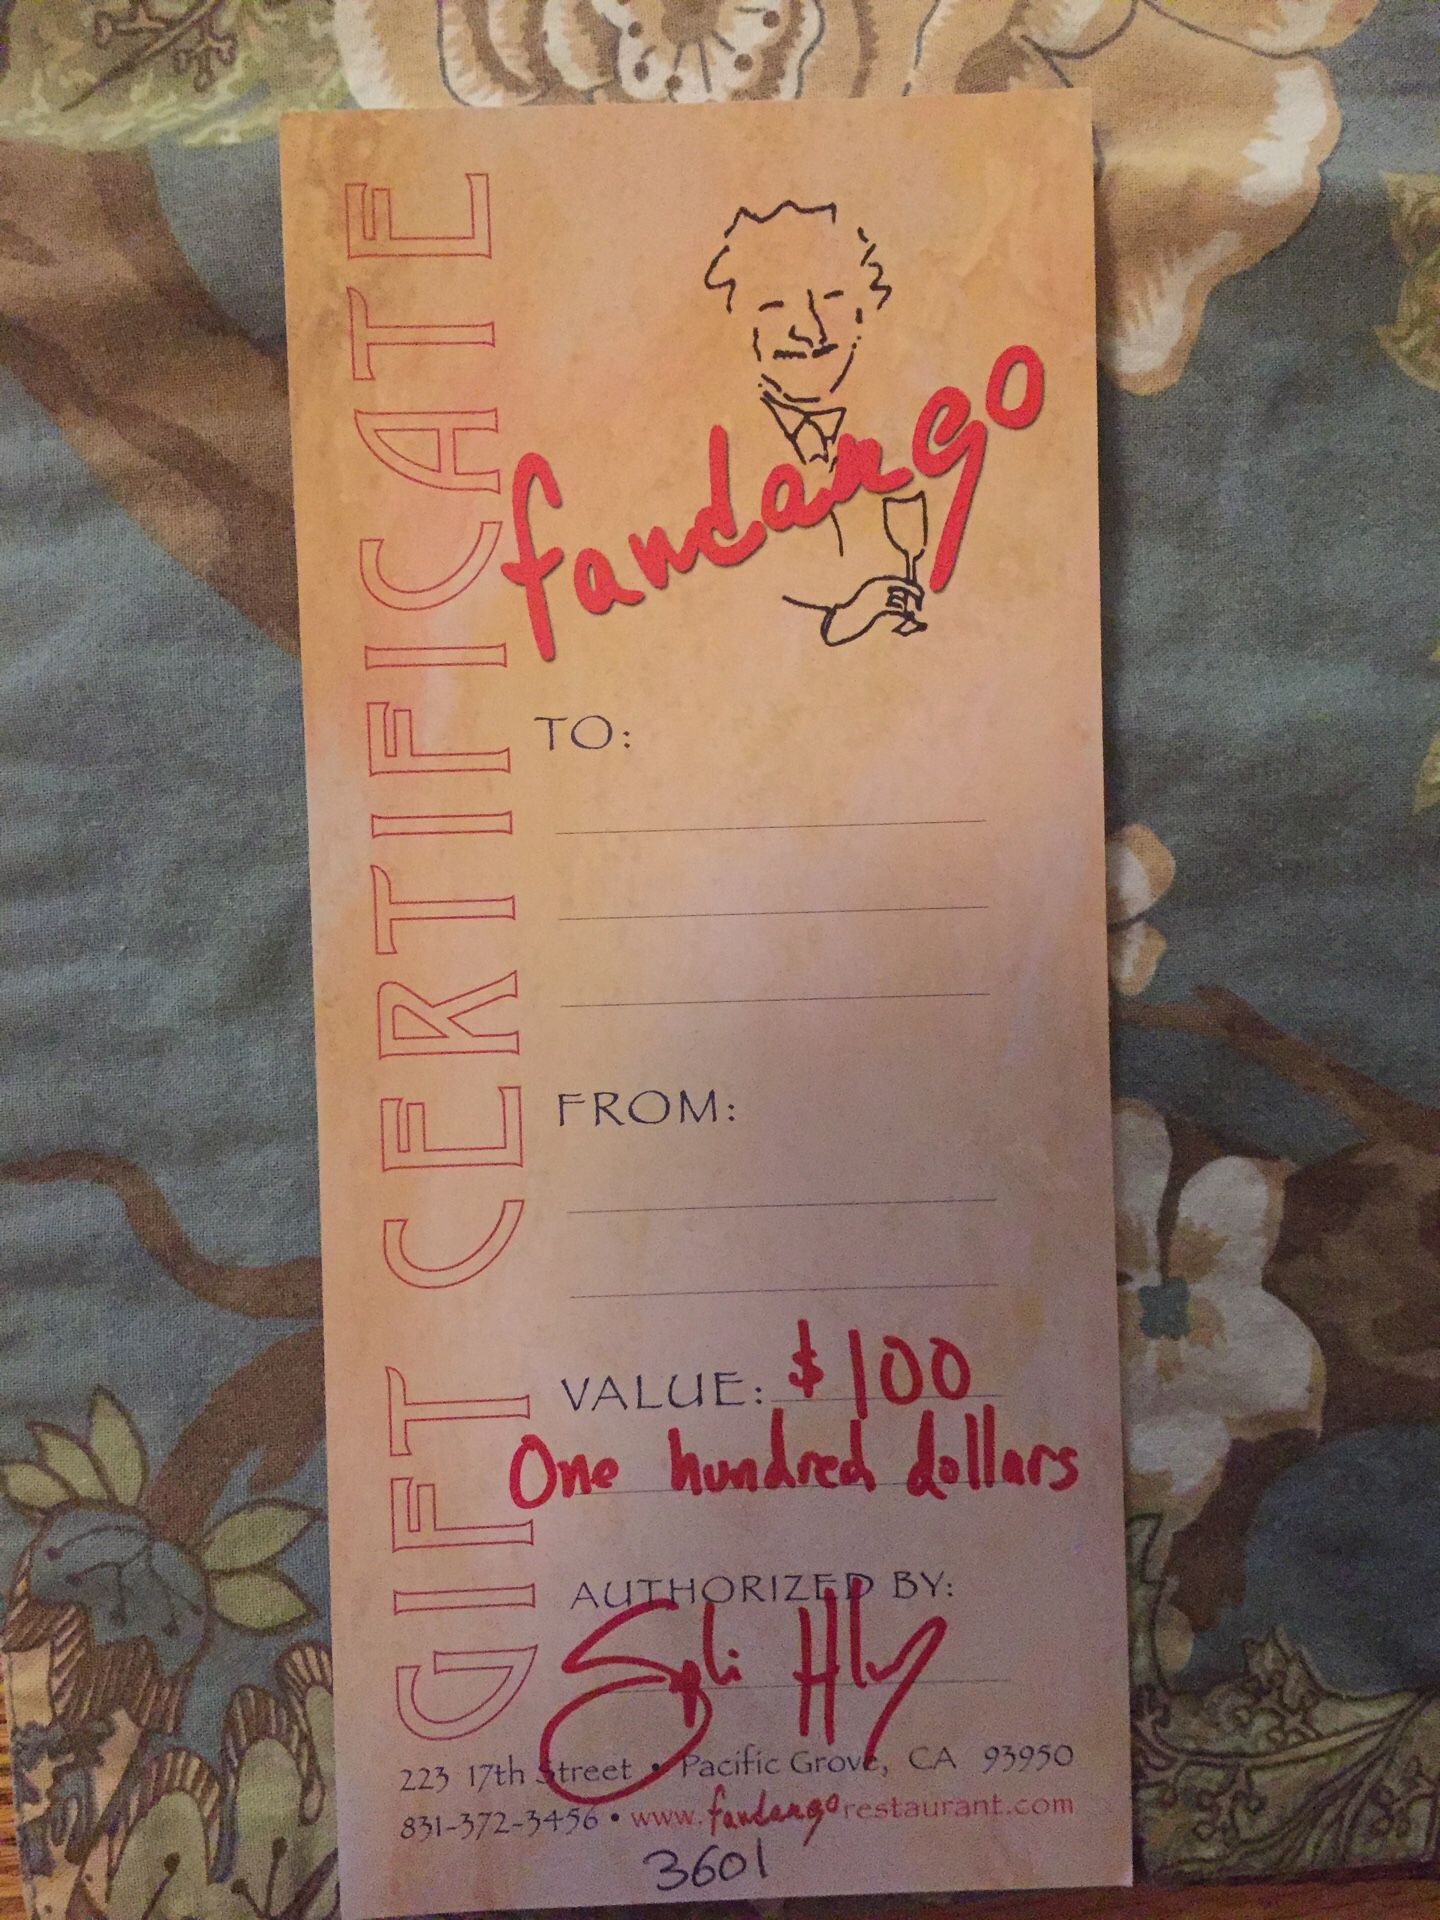 $100 Fandango Restaurant gift certificate